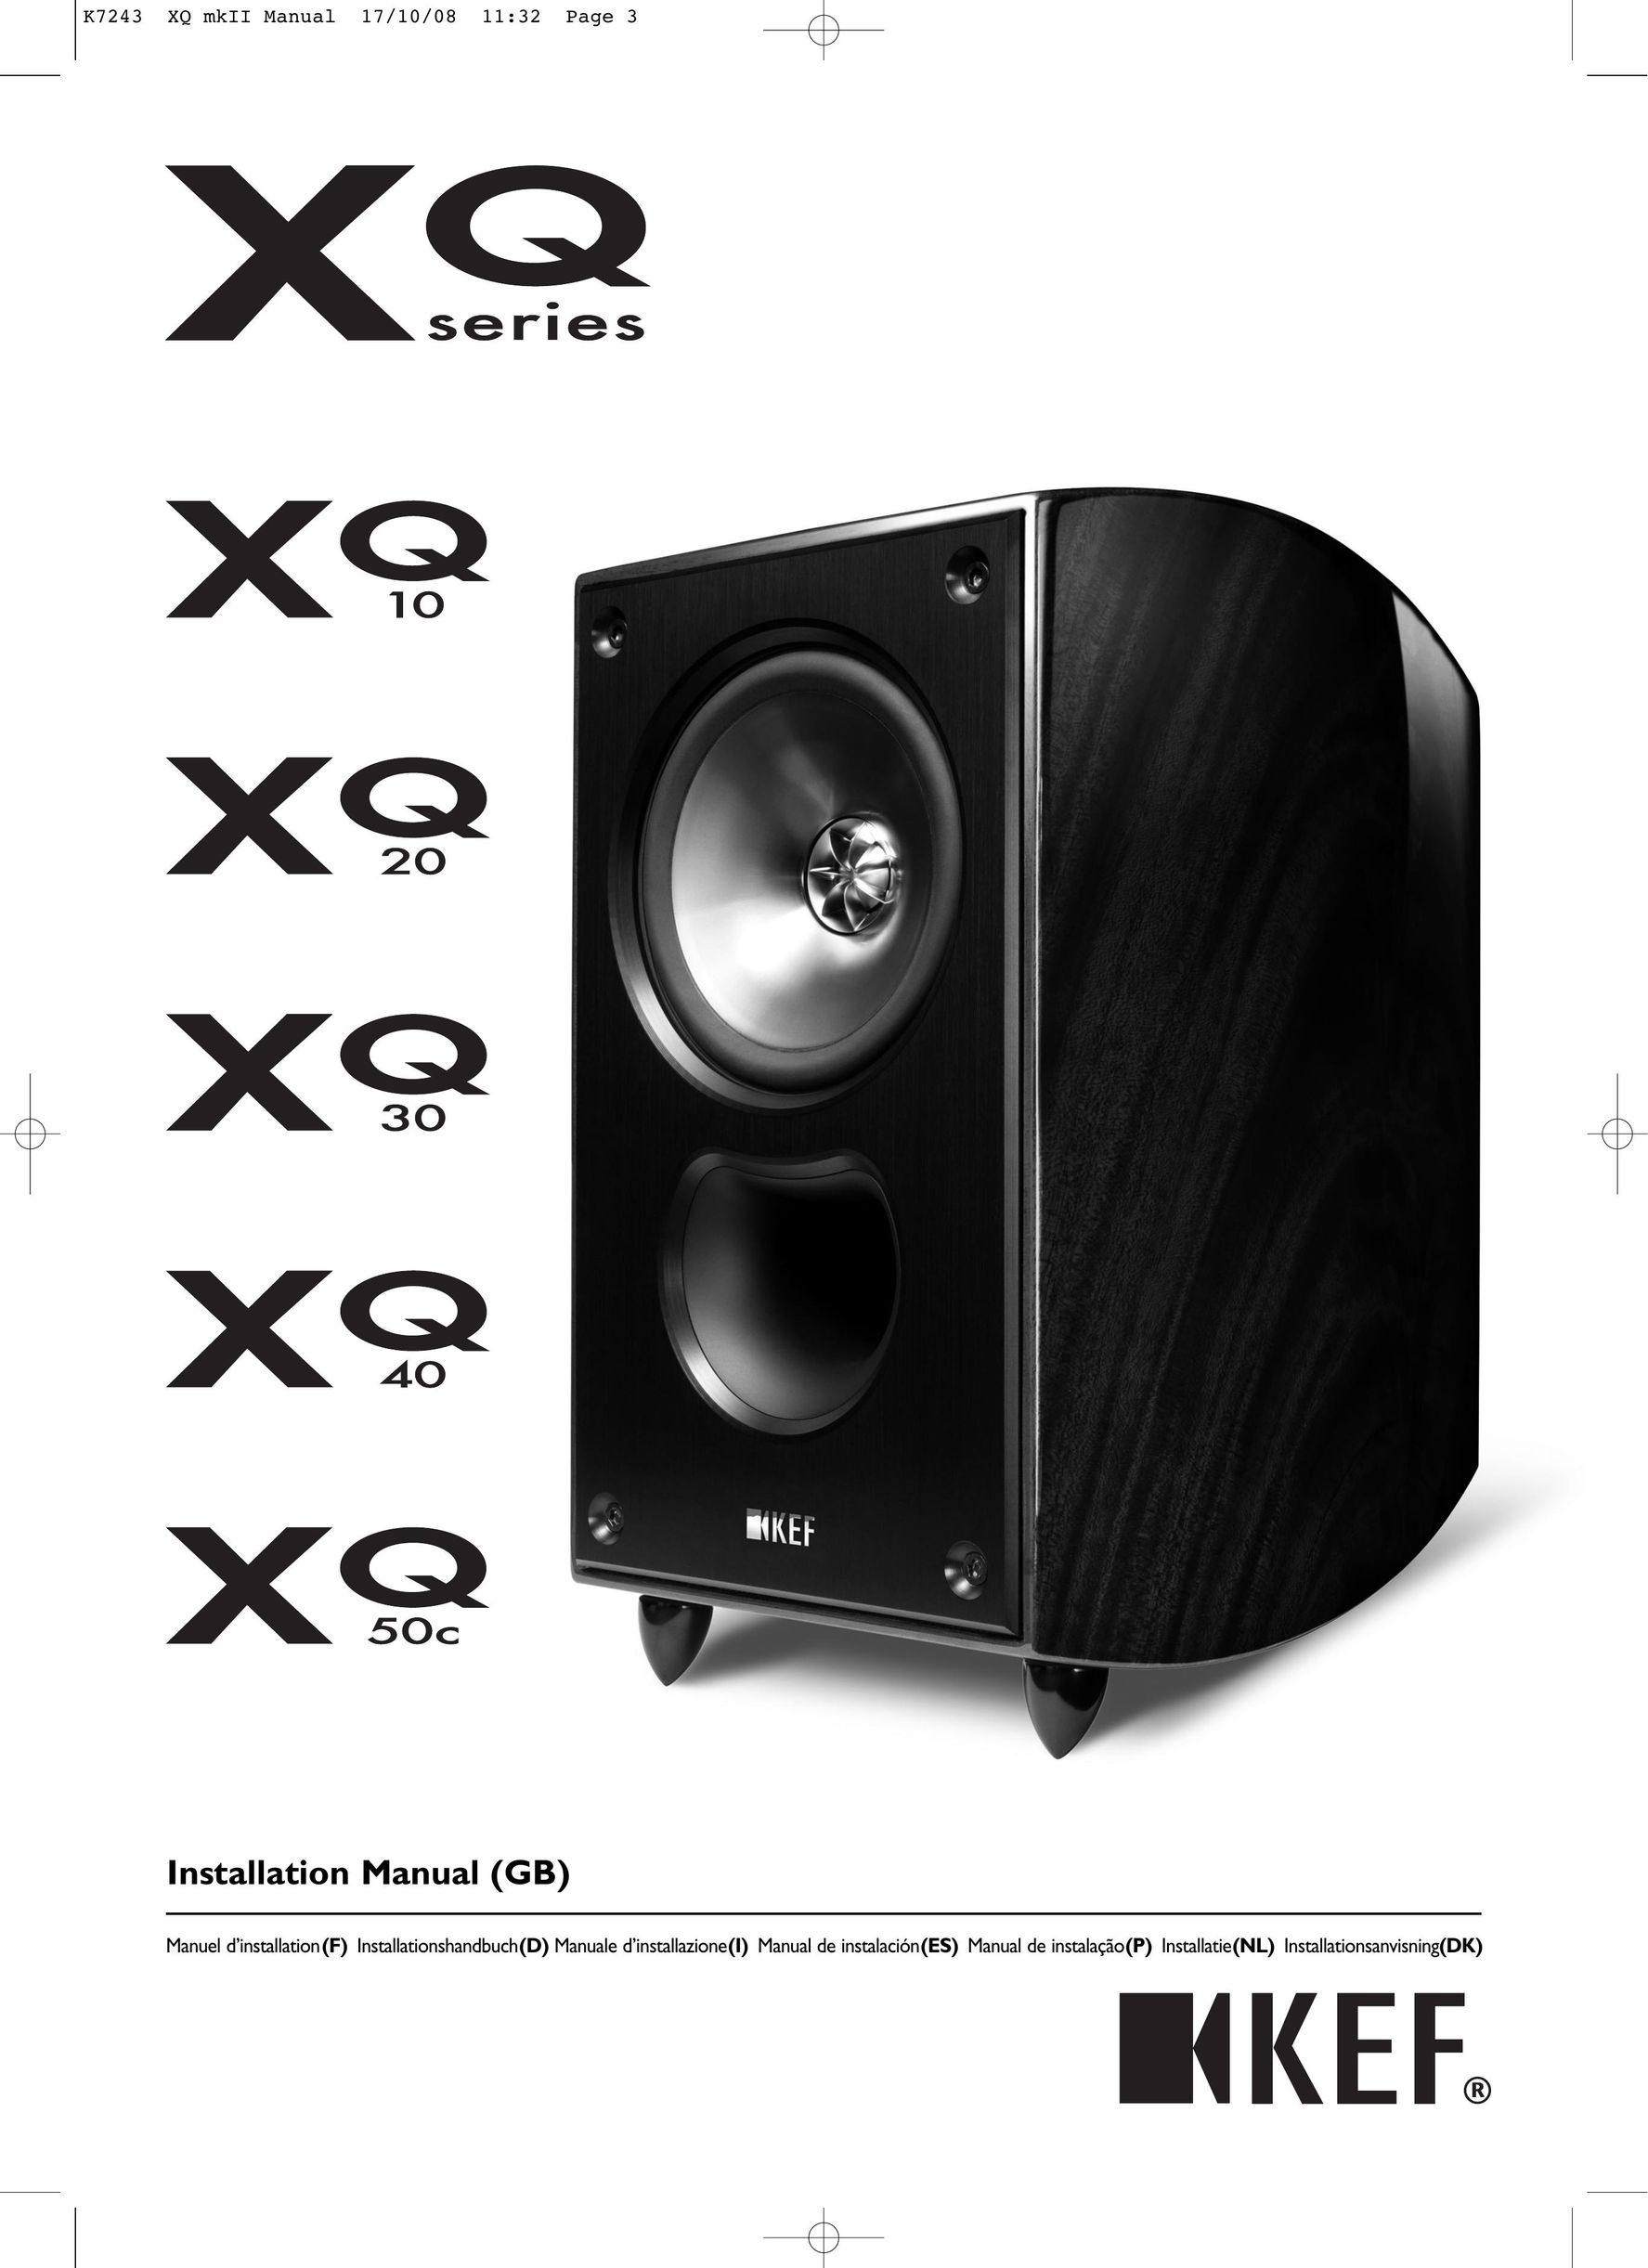 KEF Audio XQ30 Speaker User Manual